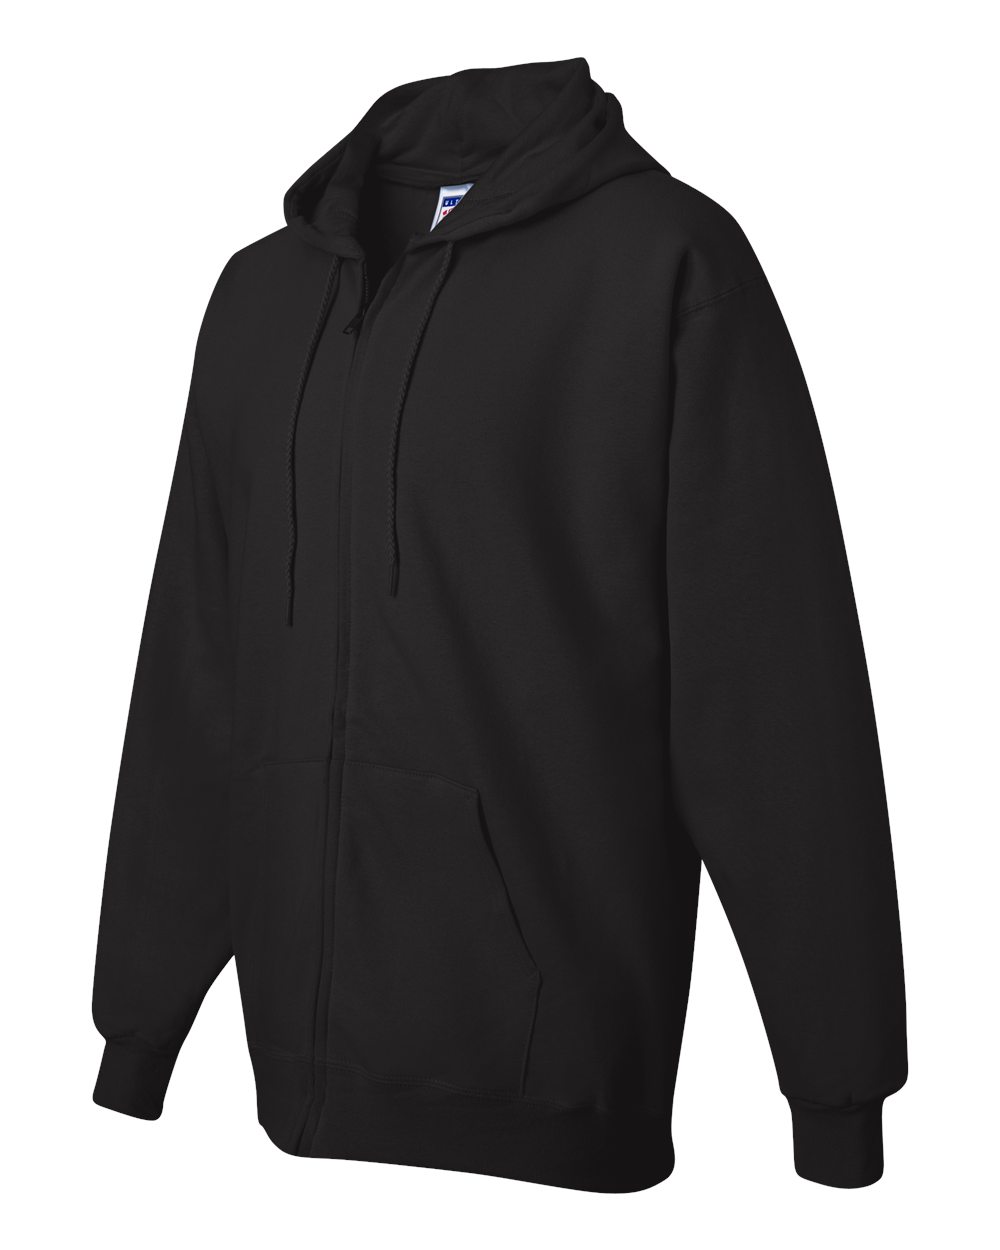 Hanes F280 - PrintProXP Ultimate Cotton Full-Zip Hooded Sweatshirt $25. ...